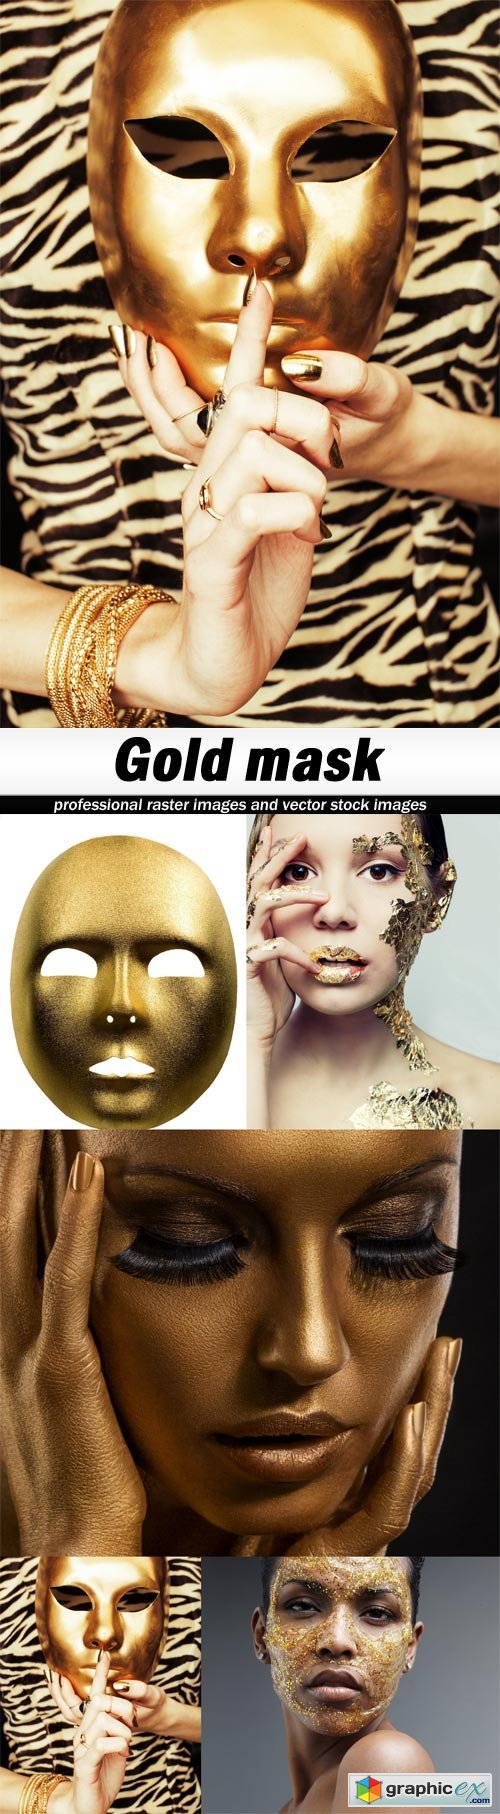 Gold mask-5xUHQ JPEG